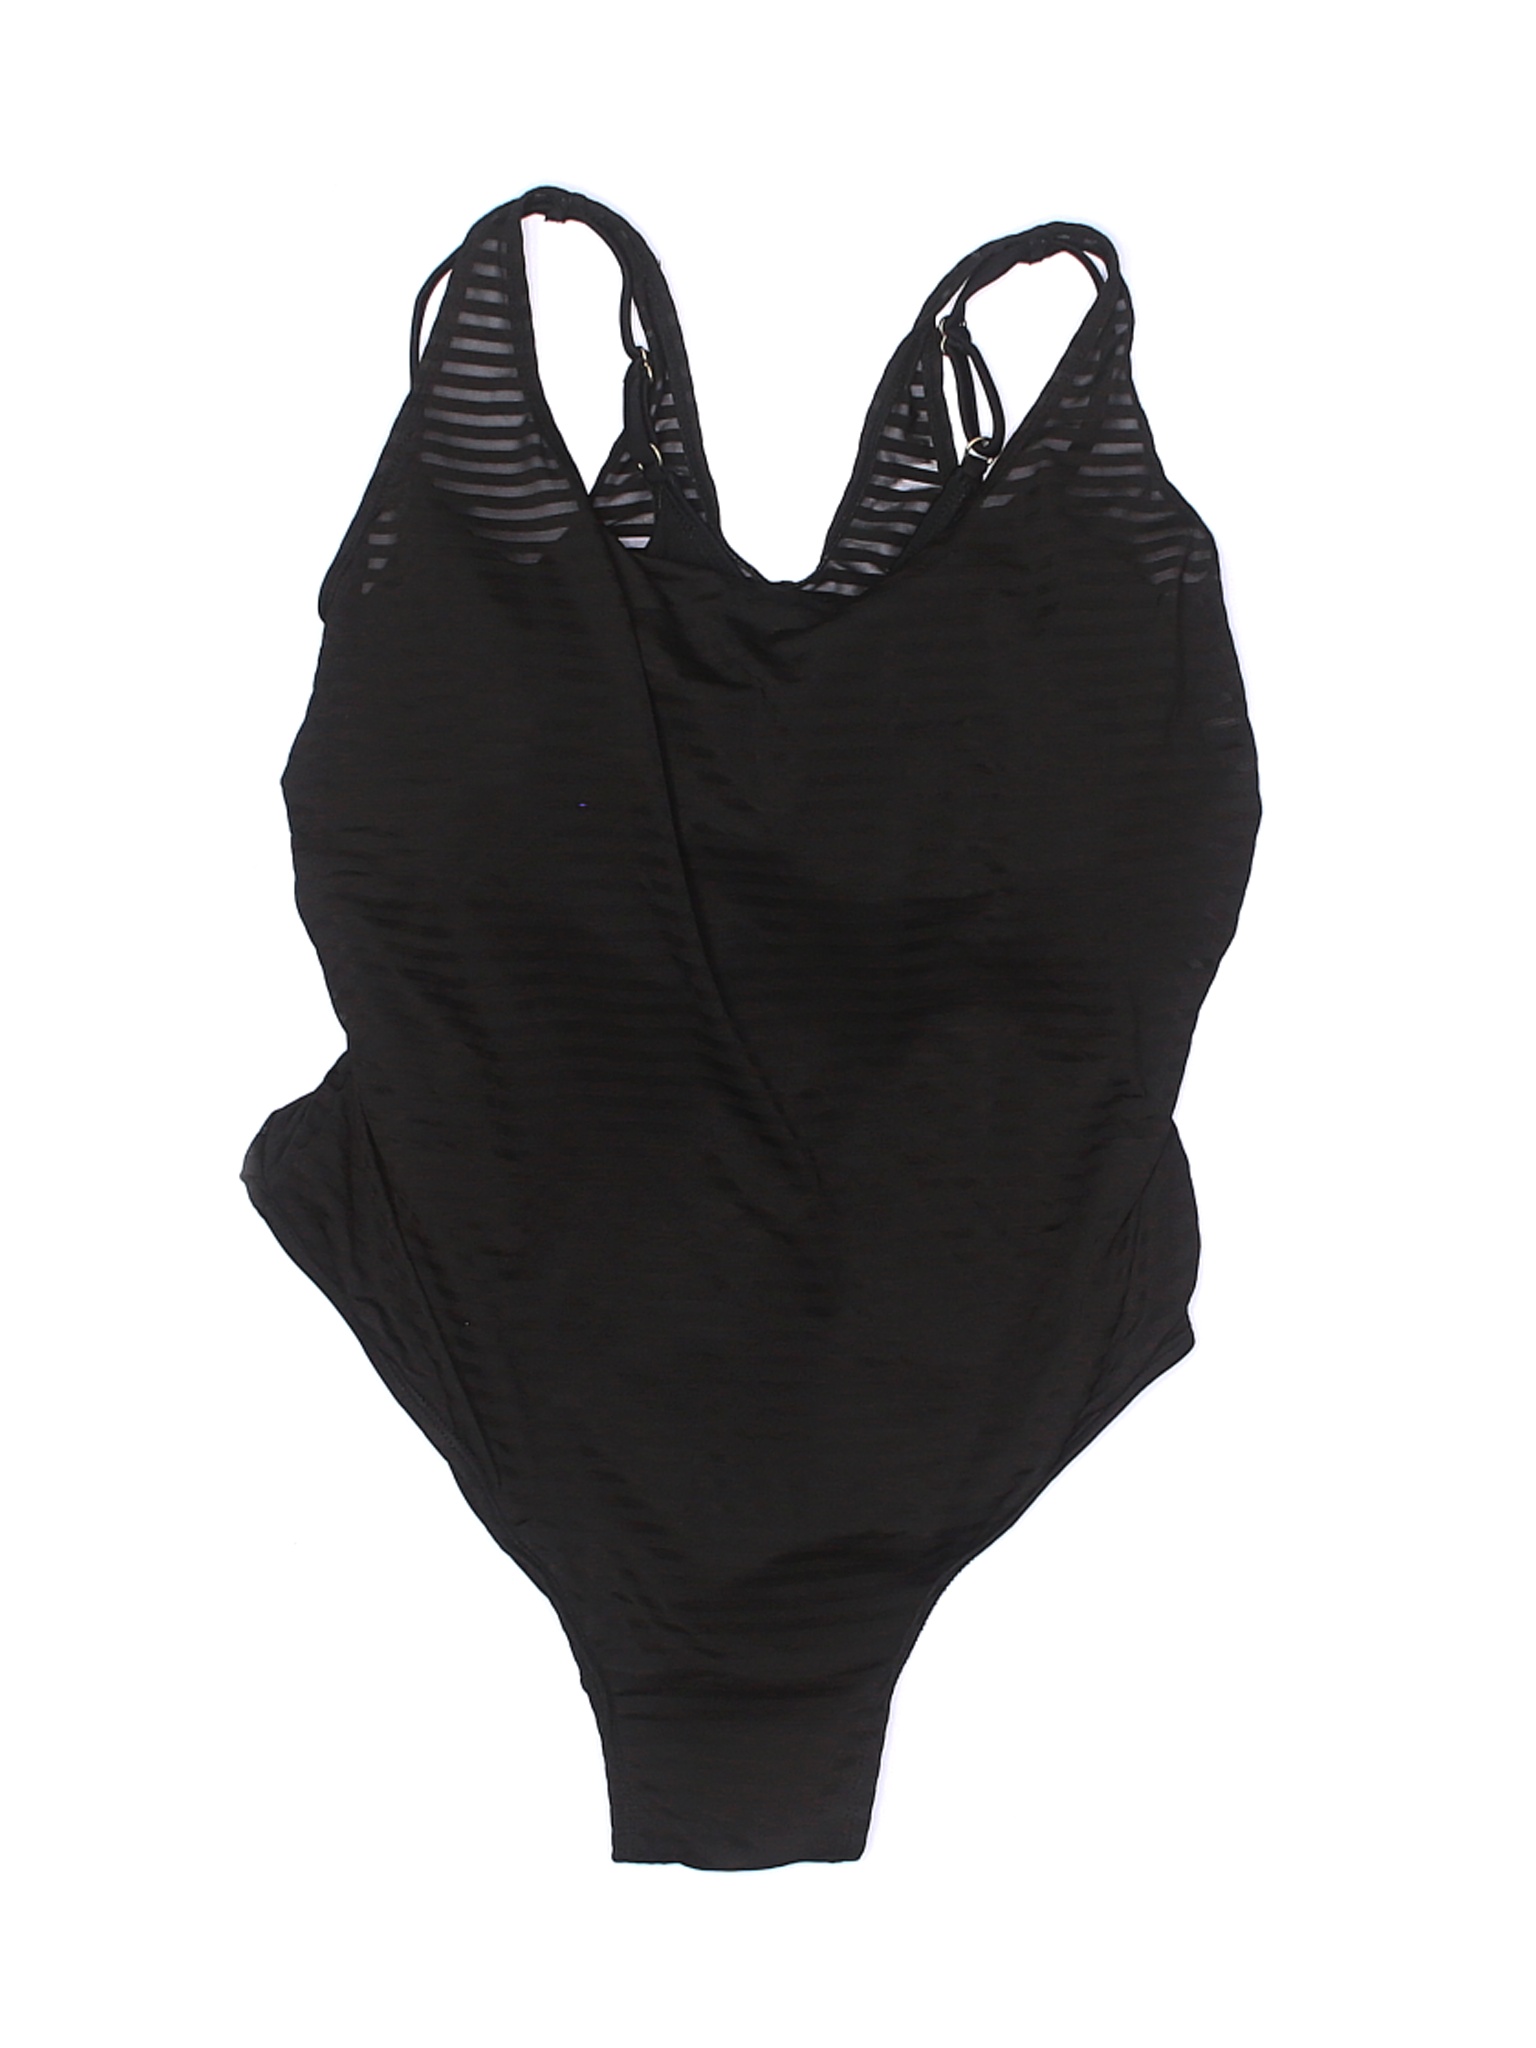 Catalina Women Black One Piece Swimsuit 1X Plus | eBay